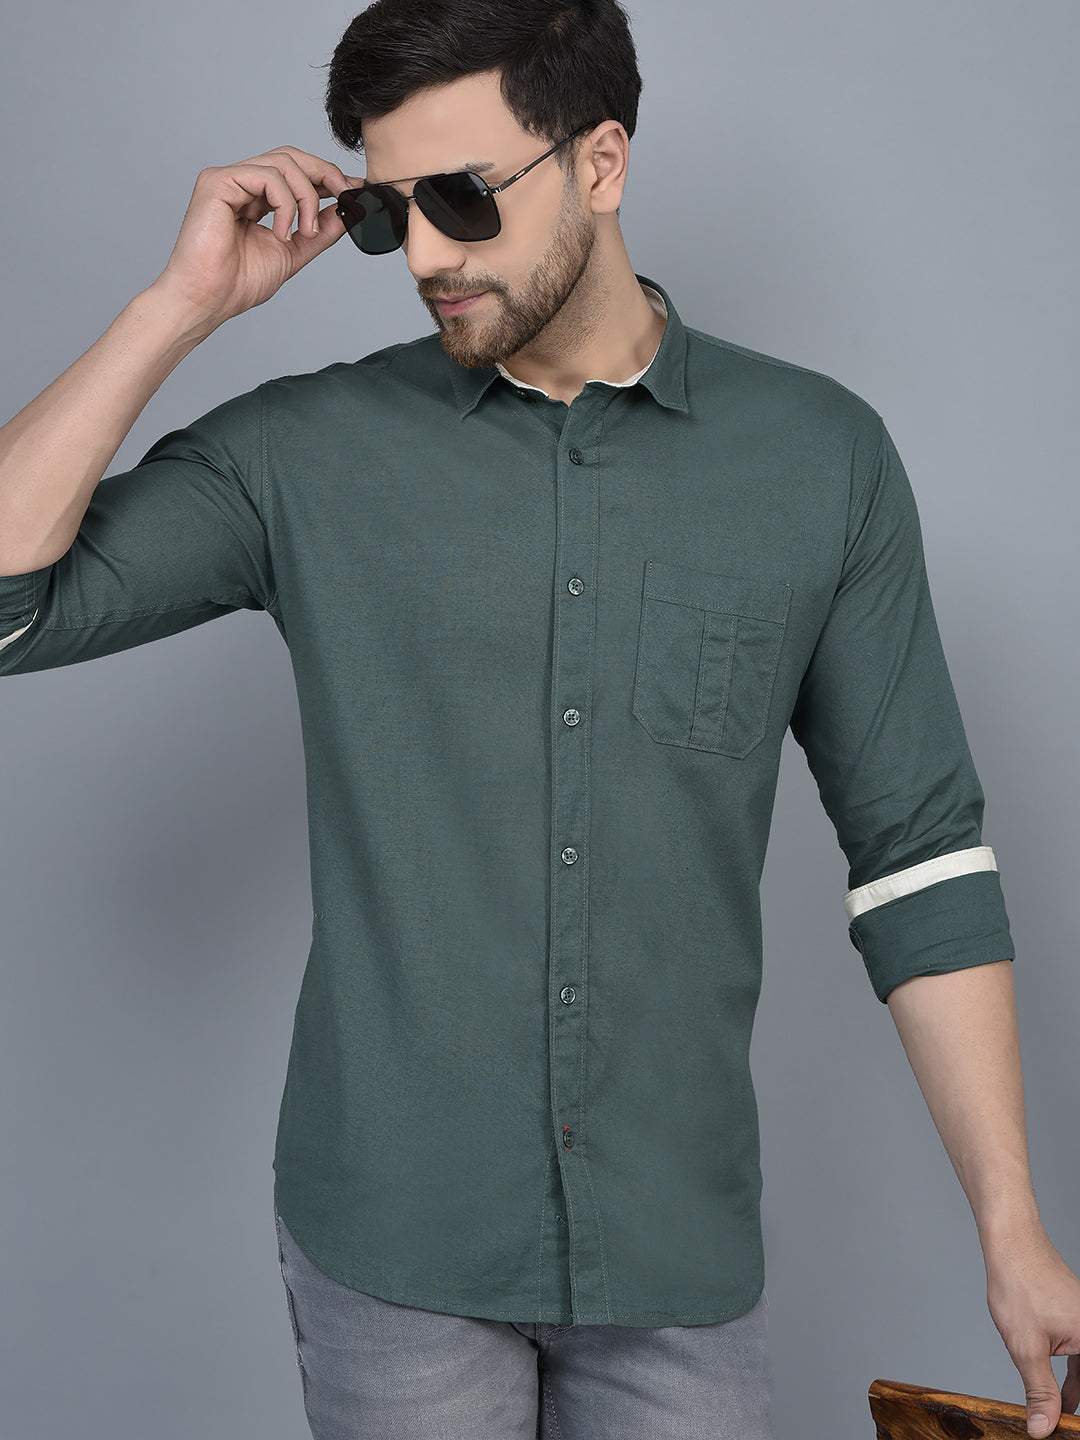 Cobb Green Solid Slim Fit Casual Shirt Green